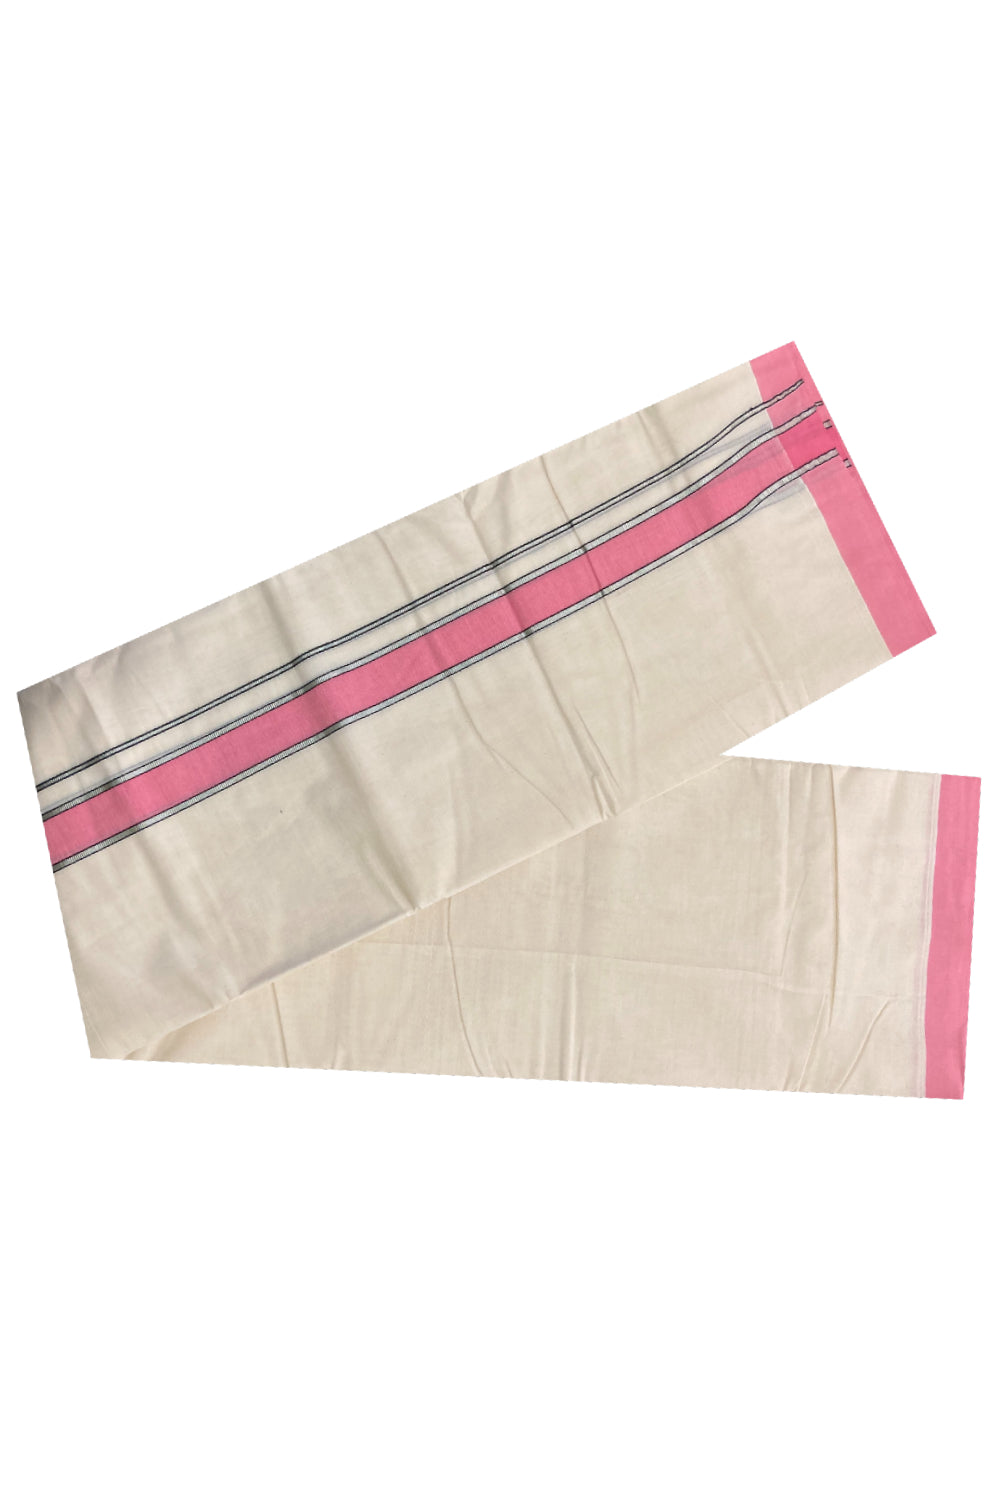 Off White Kerala Double Mundu Silver Kasavu and Pink Kara (South Indian Dhoti)